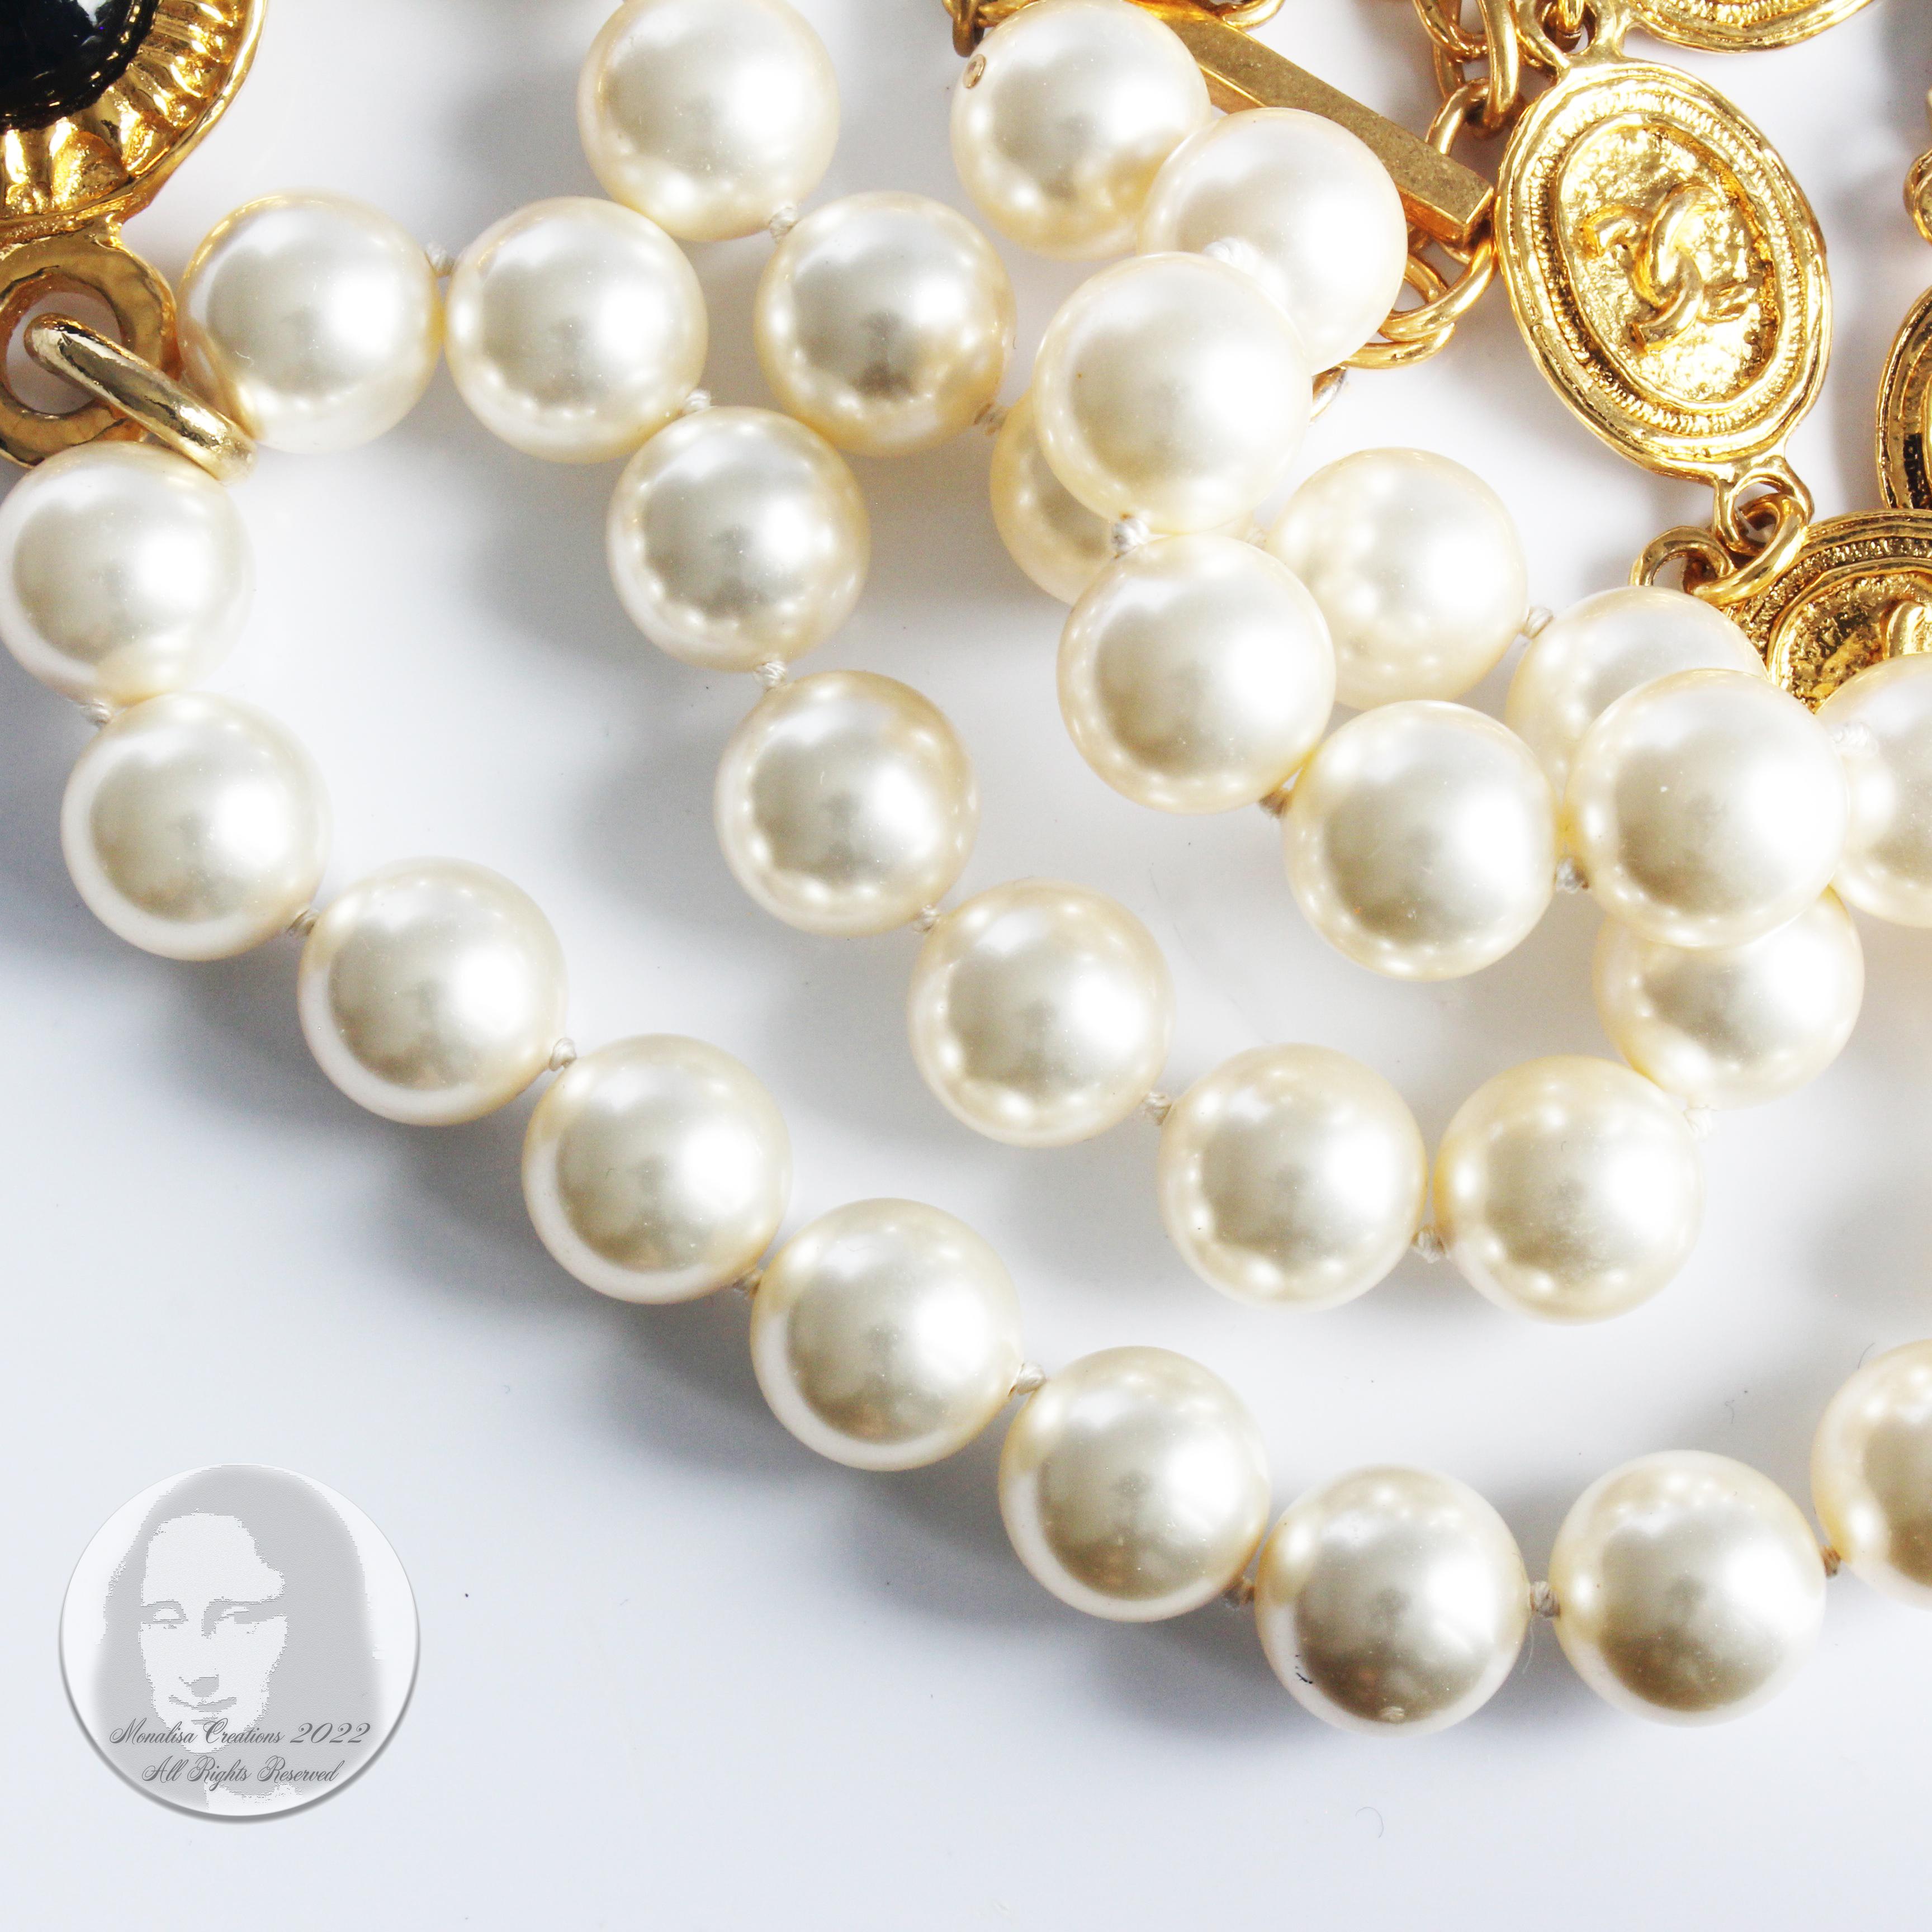 Chanel Necklace Large Medallion Pendant Poured Glass Pearls Vintage 90s + COA For Sale 5